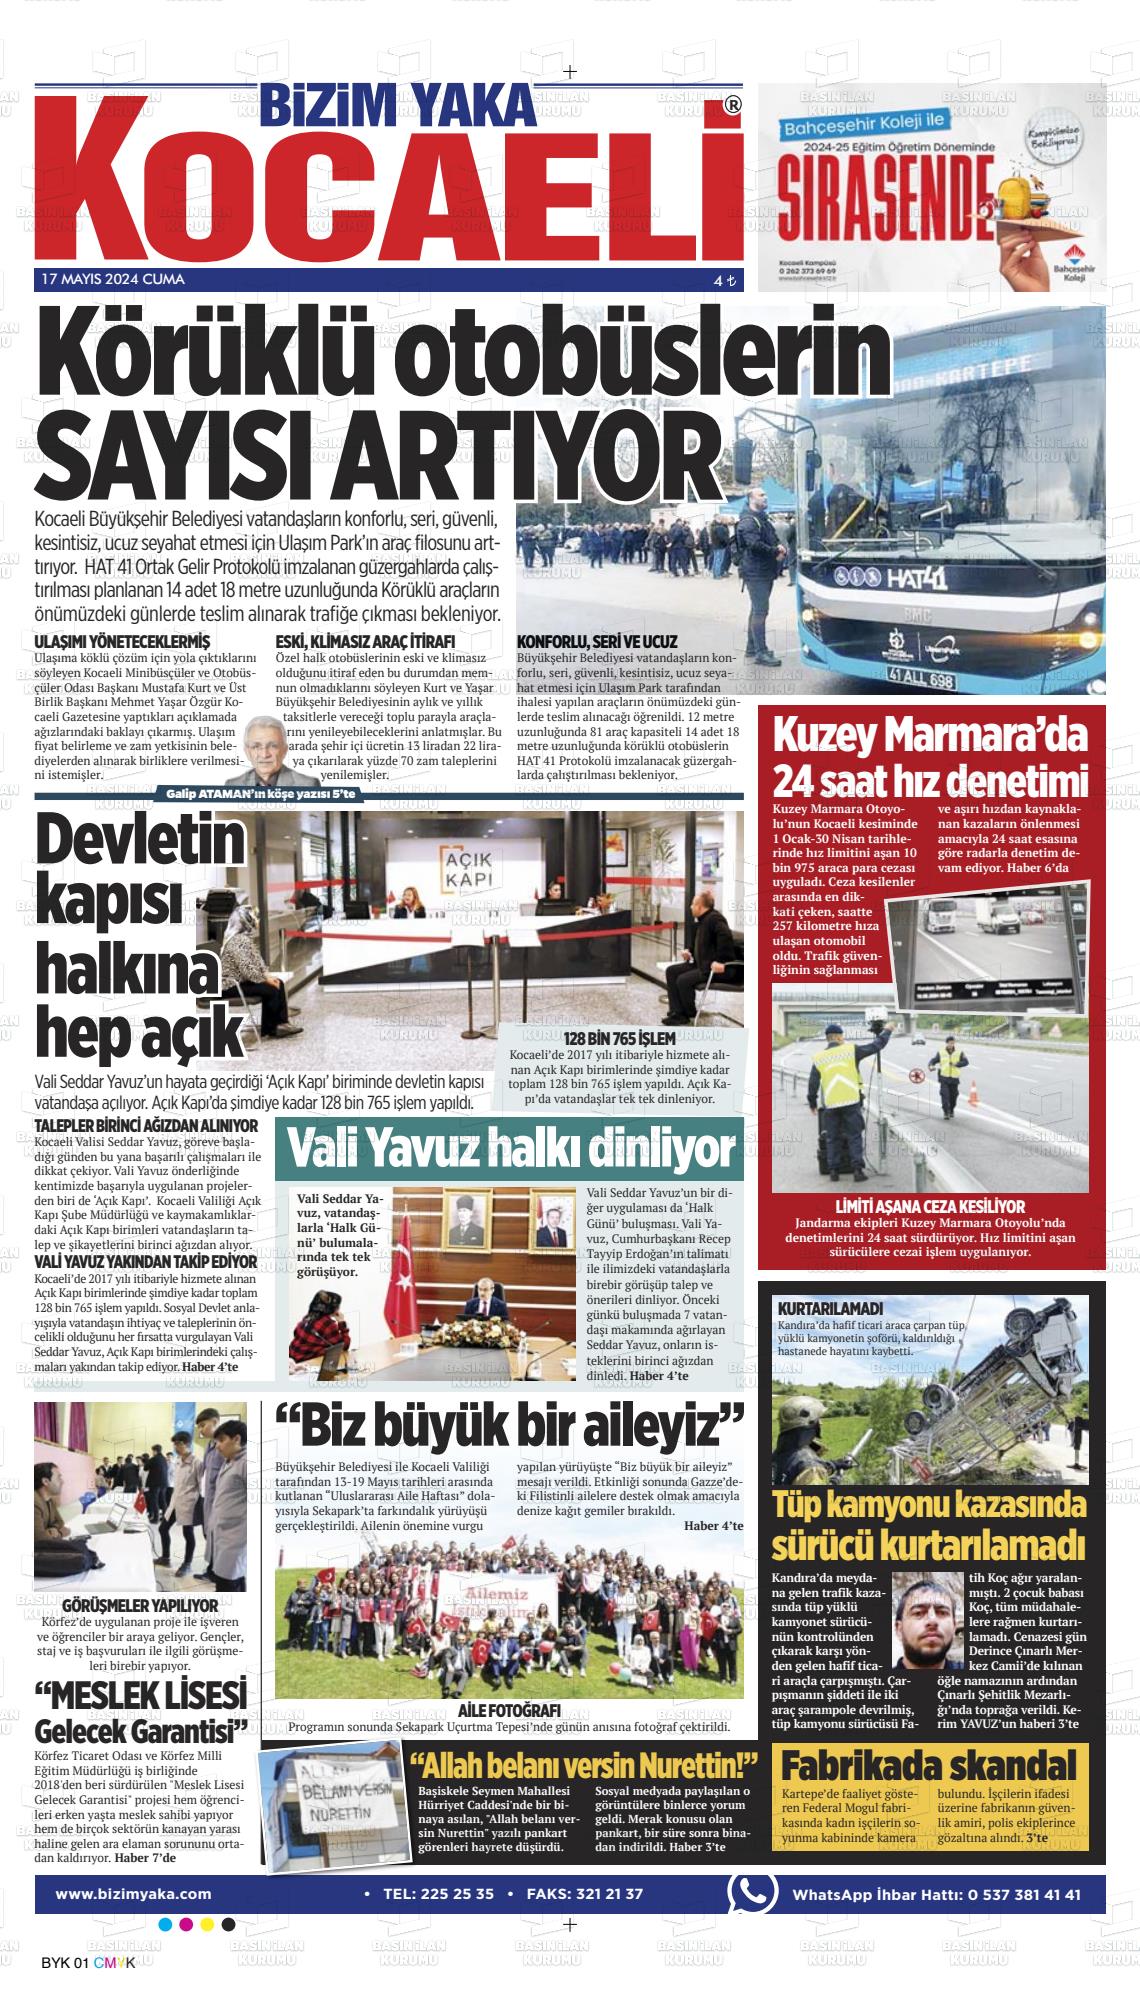 BİZİM YAKA KOCAELİ Gazetesi